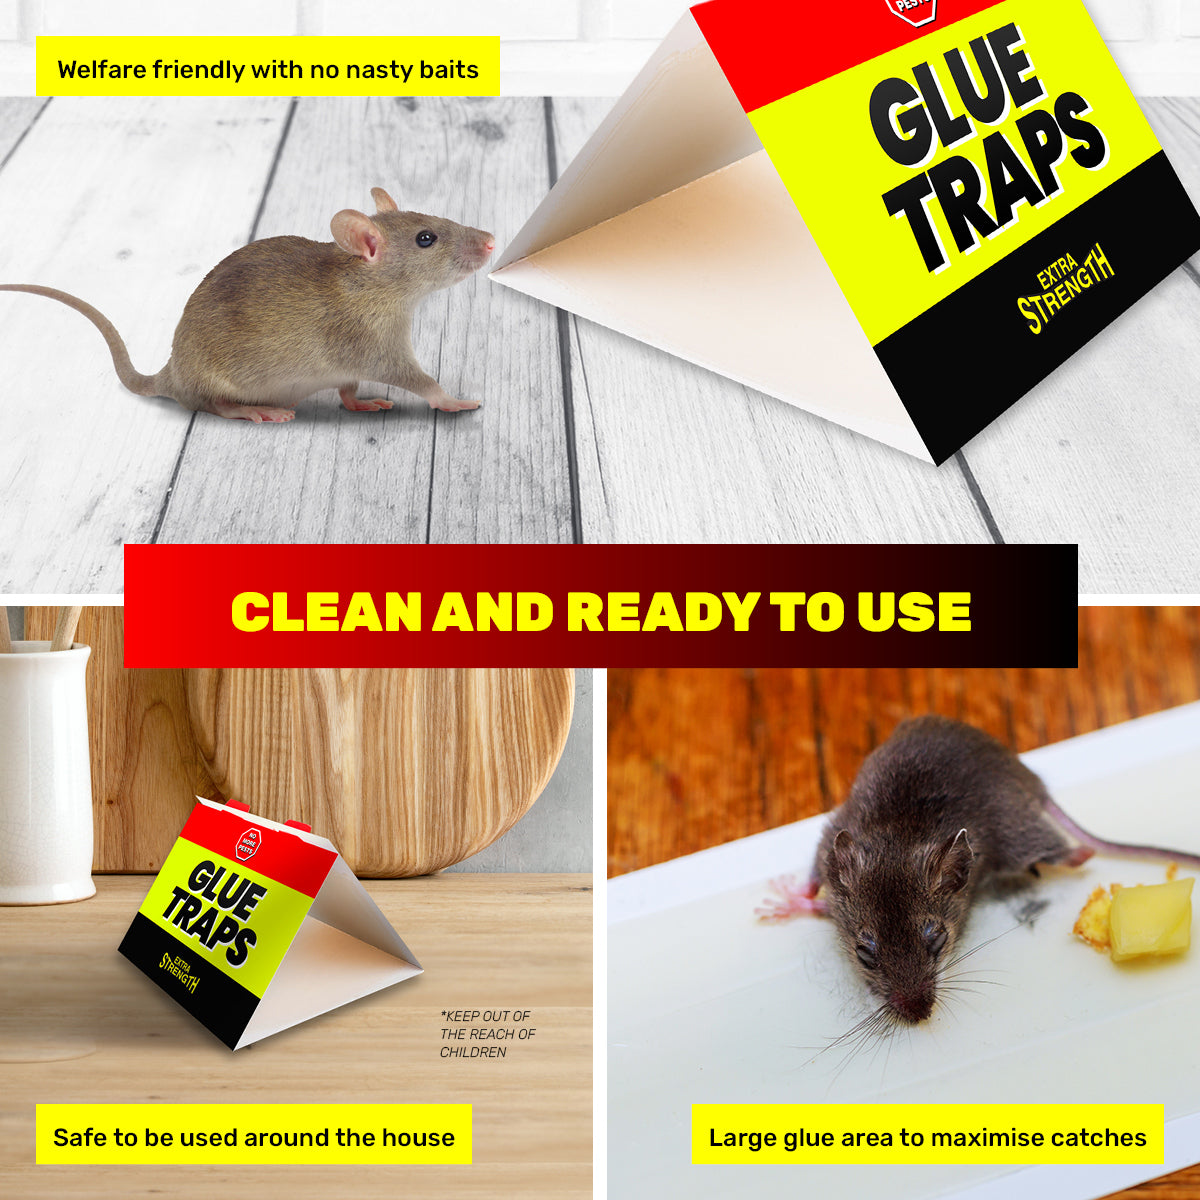 SAS Pest Control 48PCE Mice Rat Traps Peanut Scented Poison Free Non-Toxic Deals499